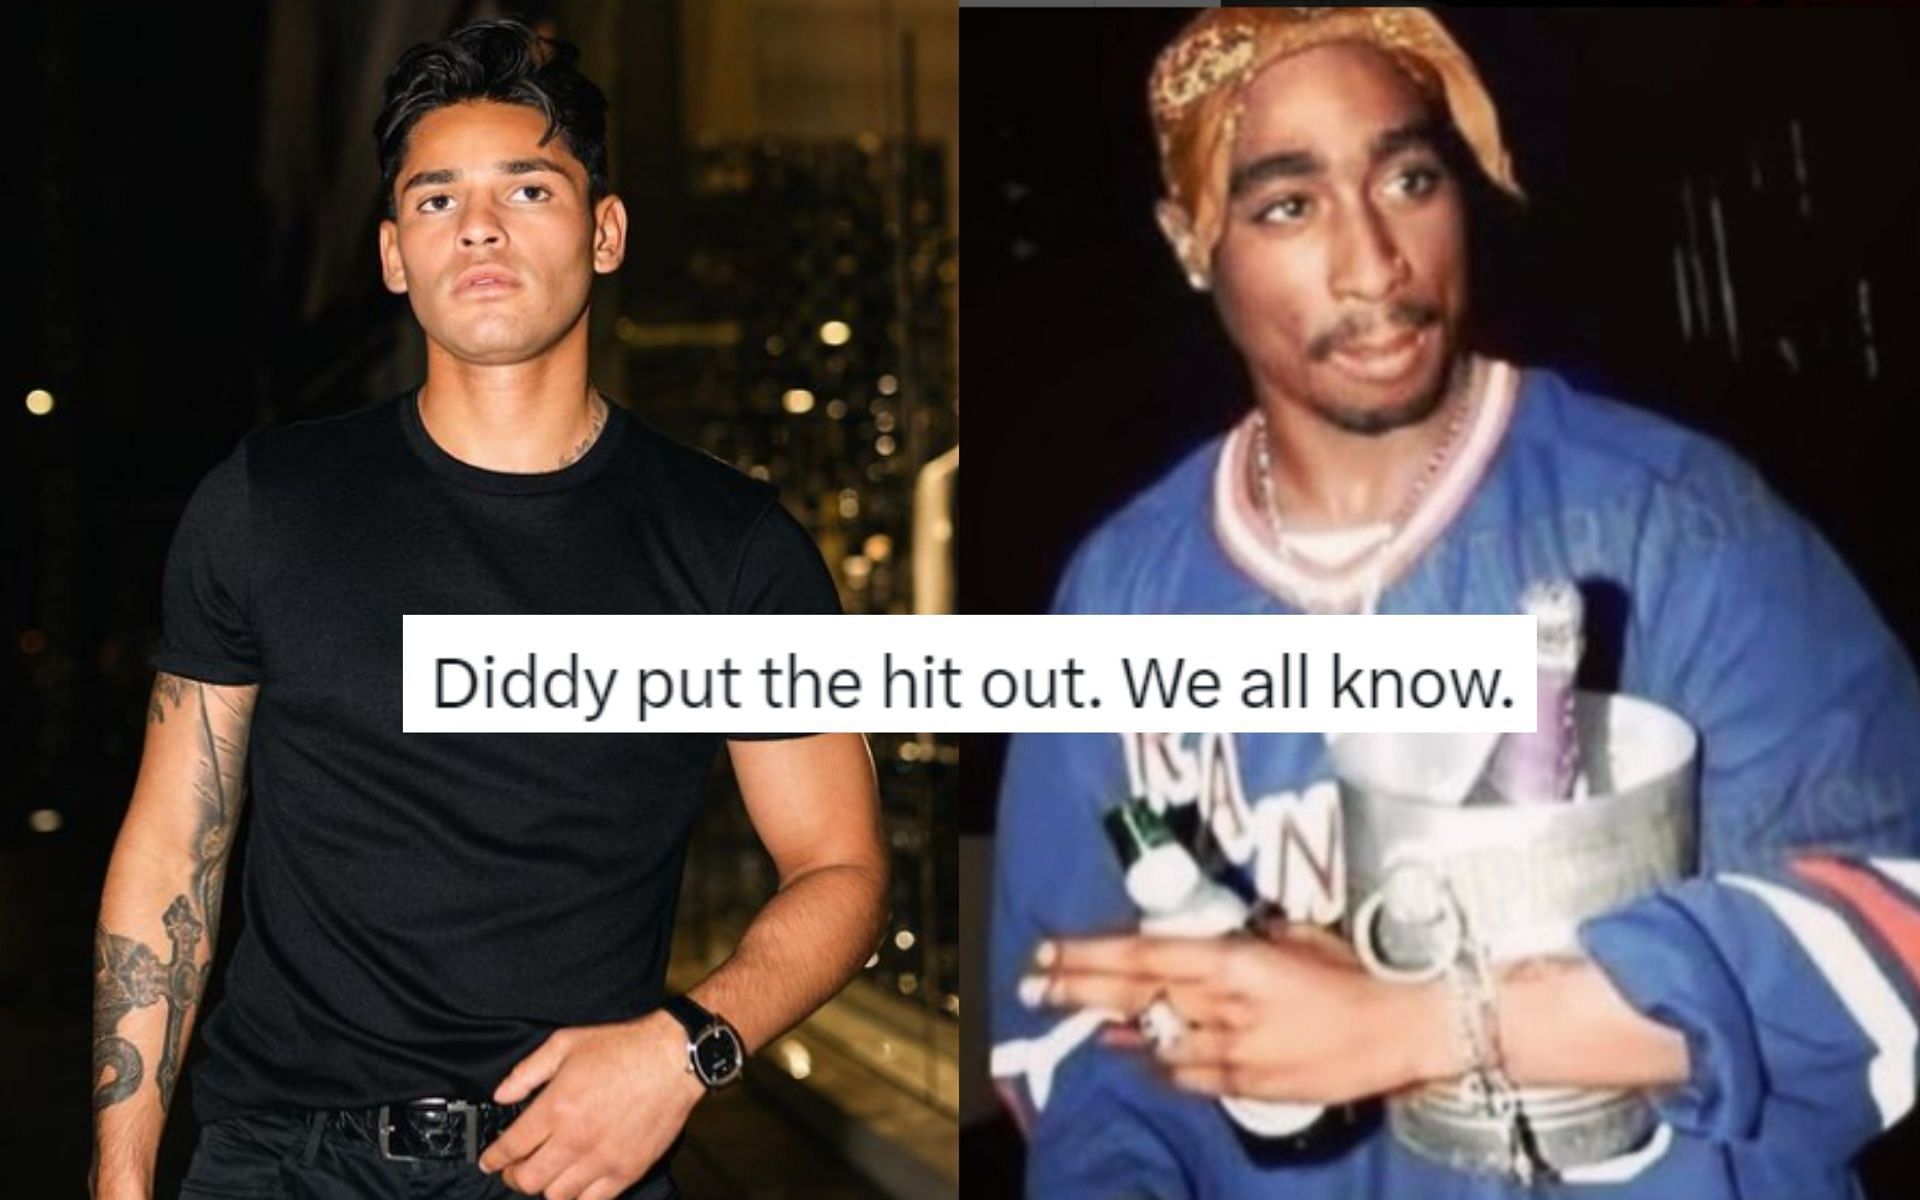 Ryan Garcia believes he knows who killed Tupac Shakur. [Images via @kingryan and @2pac on Instagram]